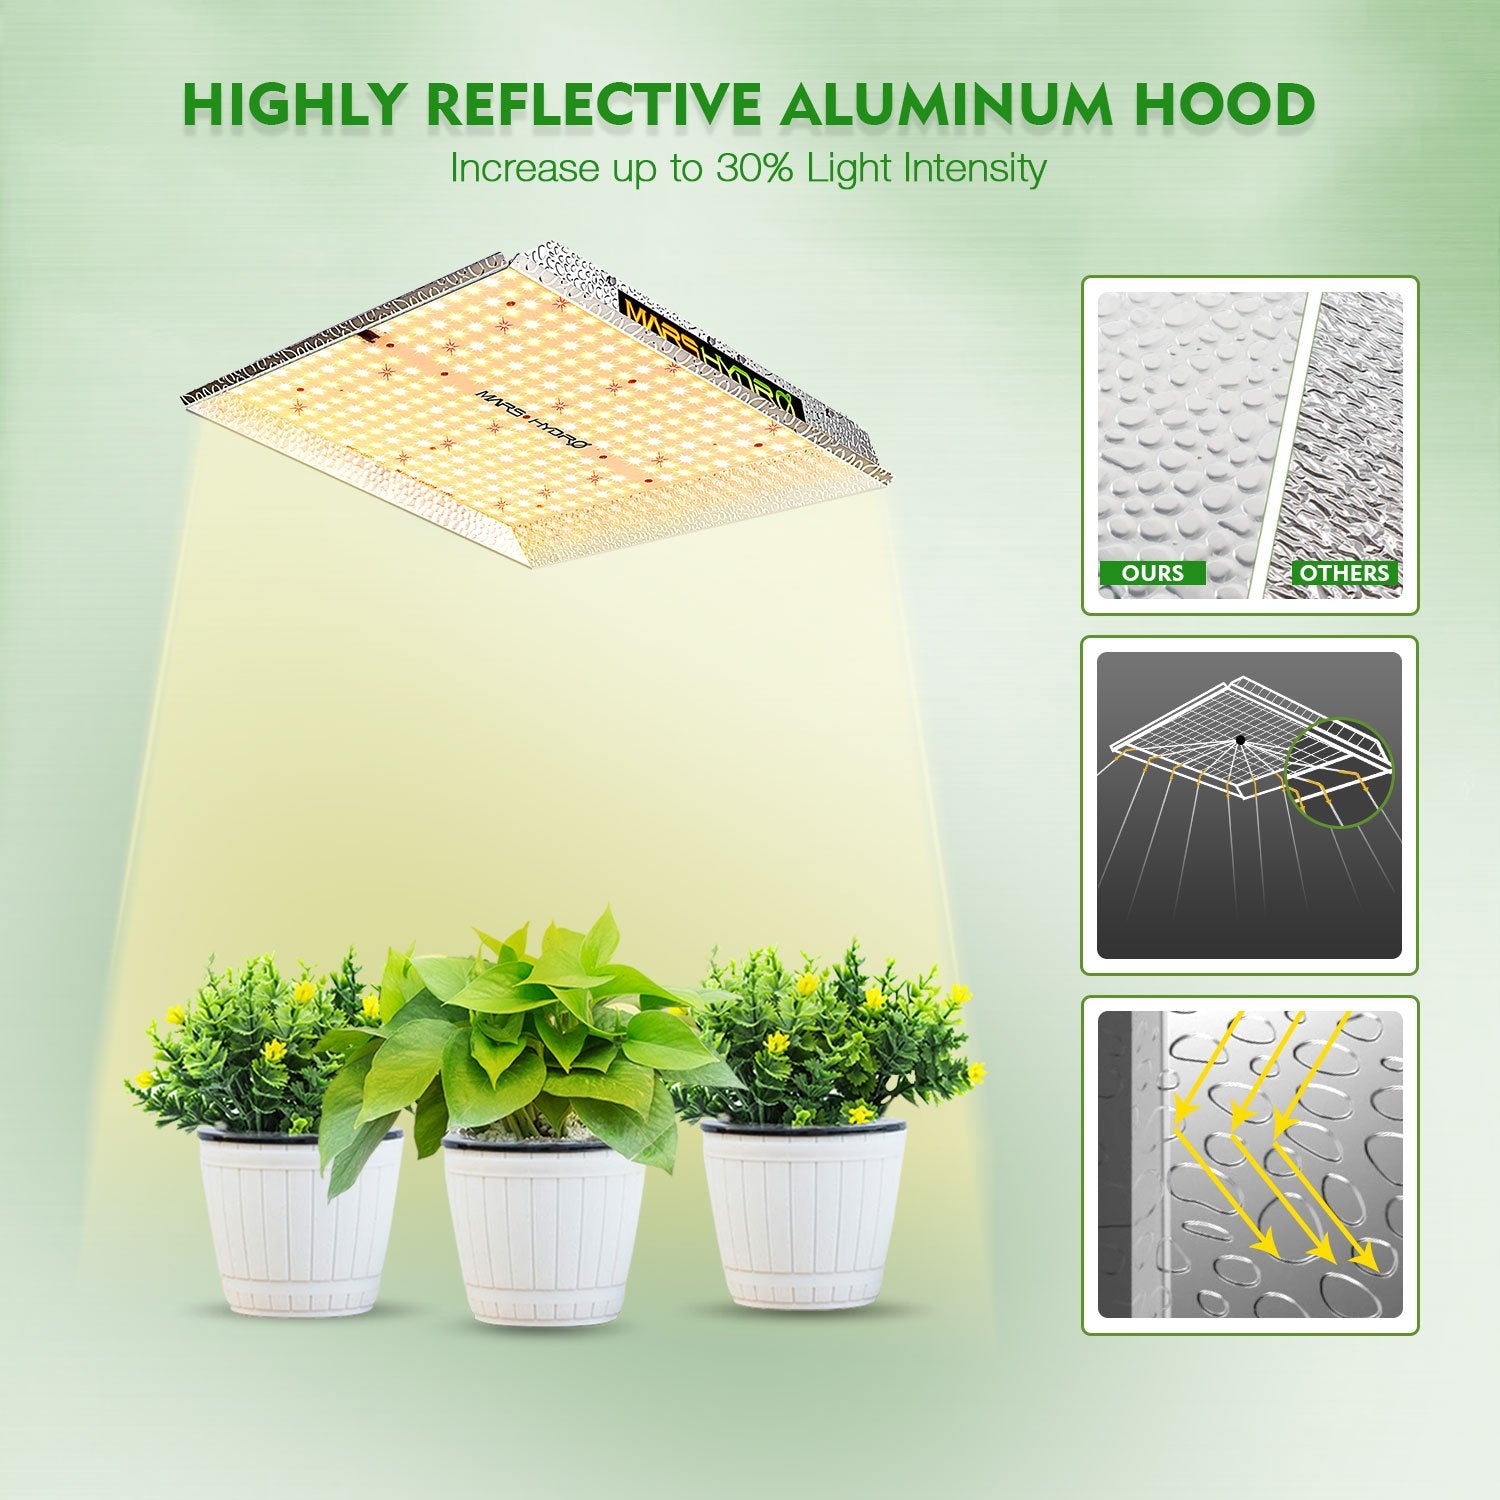 TS 1000 Full Spectrum LED Grow Lights + 2.3'x2.3'x5.2'(70×70×160cm) Grow Tent Indoor Home Veg Flower